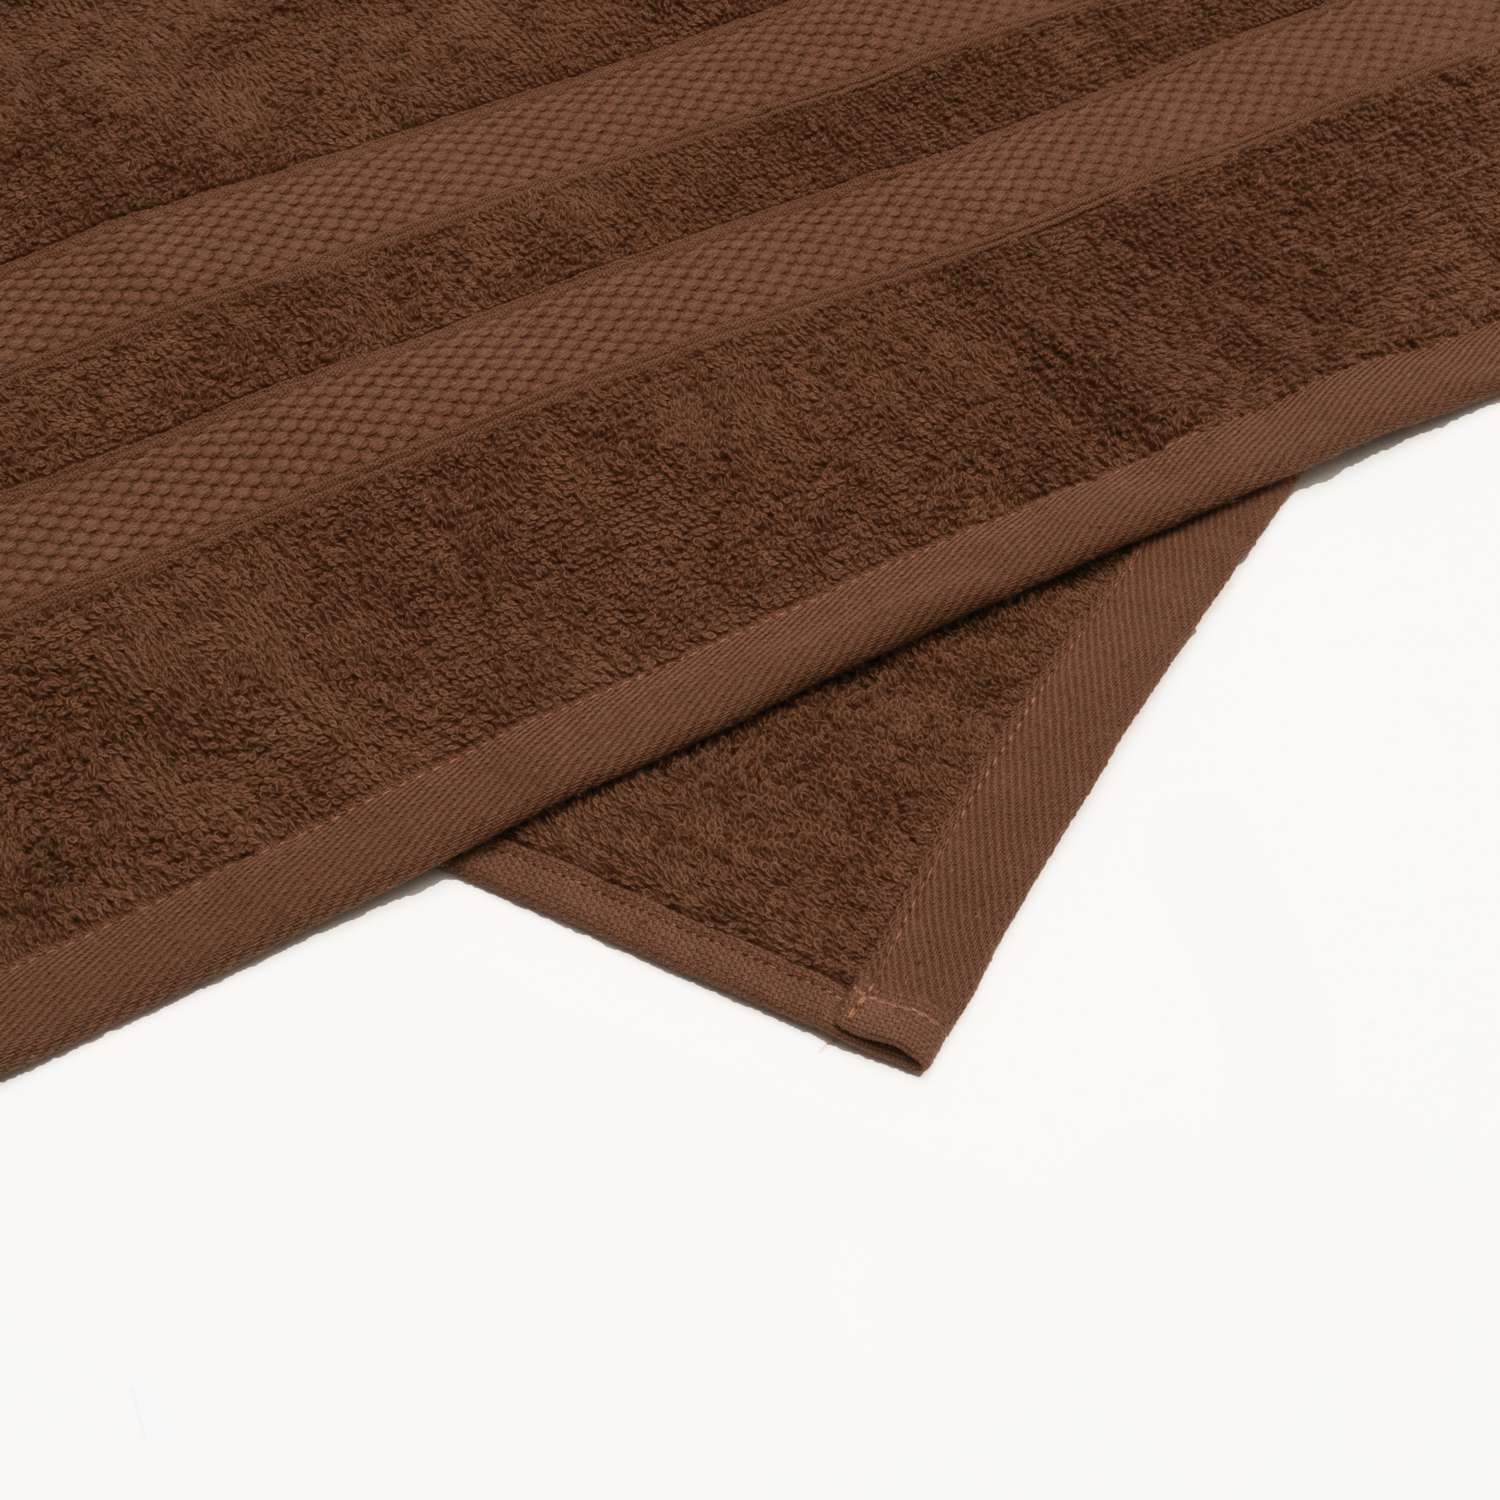 Набор махровых полотенец Unifico Nature шоколад набор из 3 шт.:30х60-1. 50х80-1. 70х130-1 - фото 15